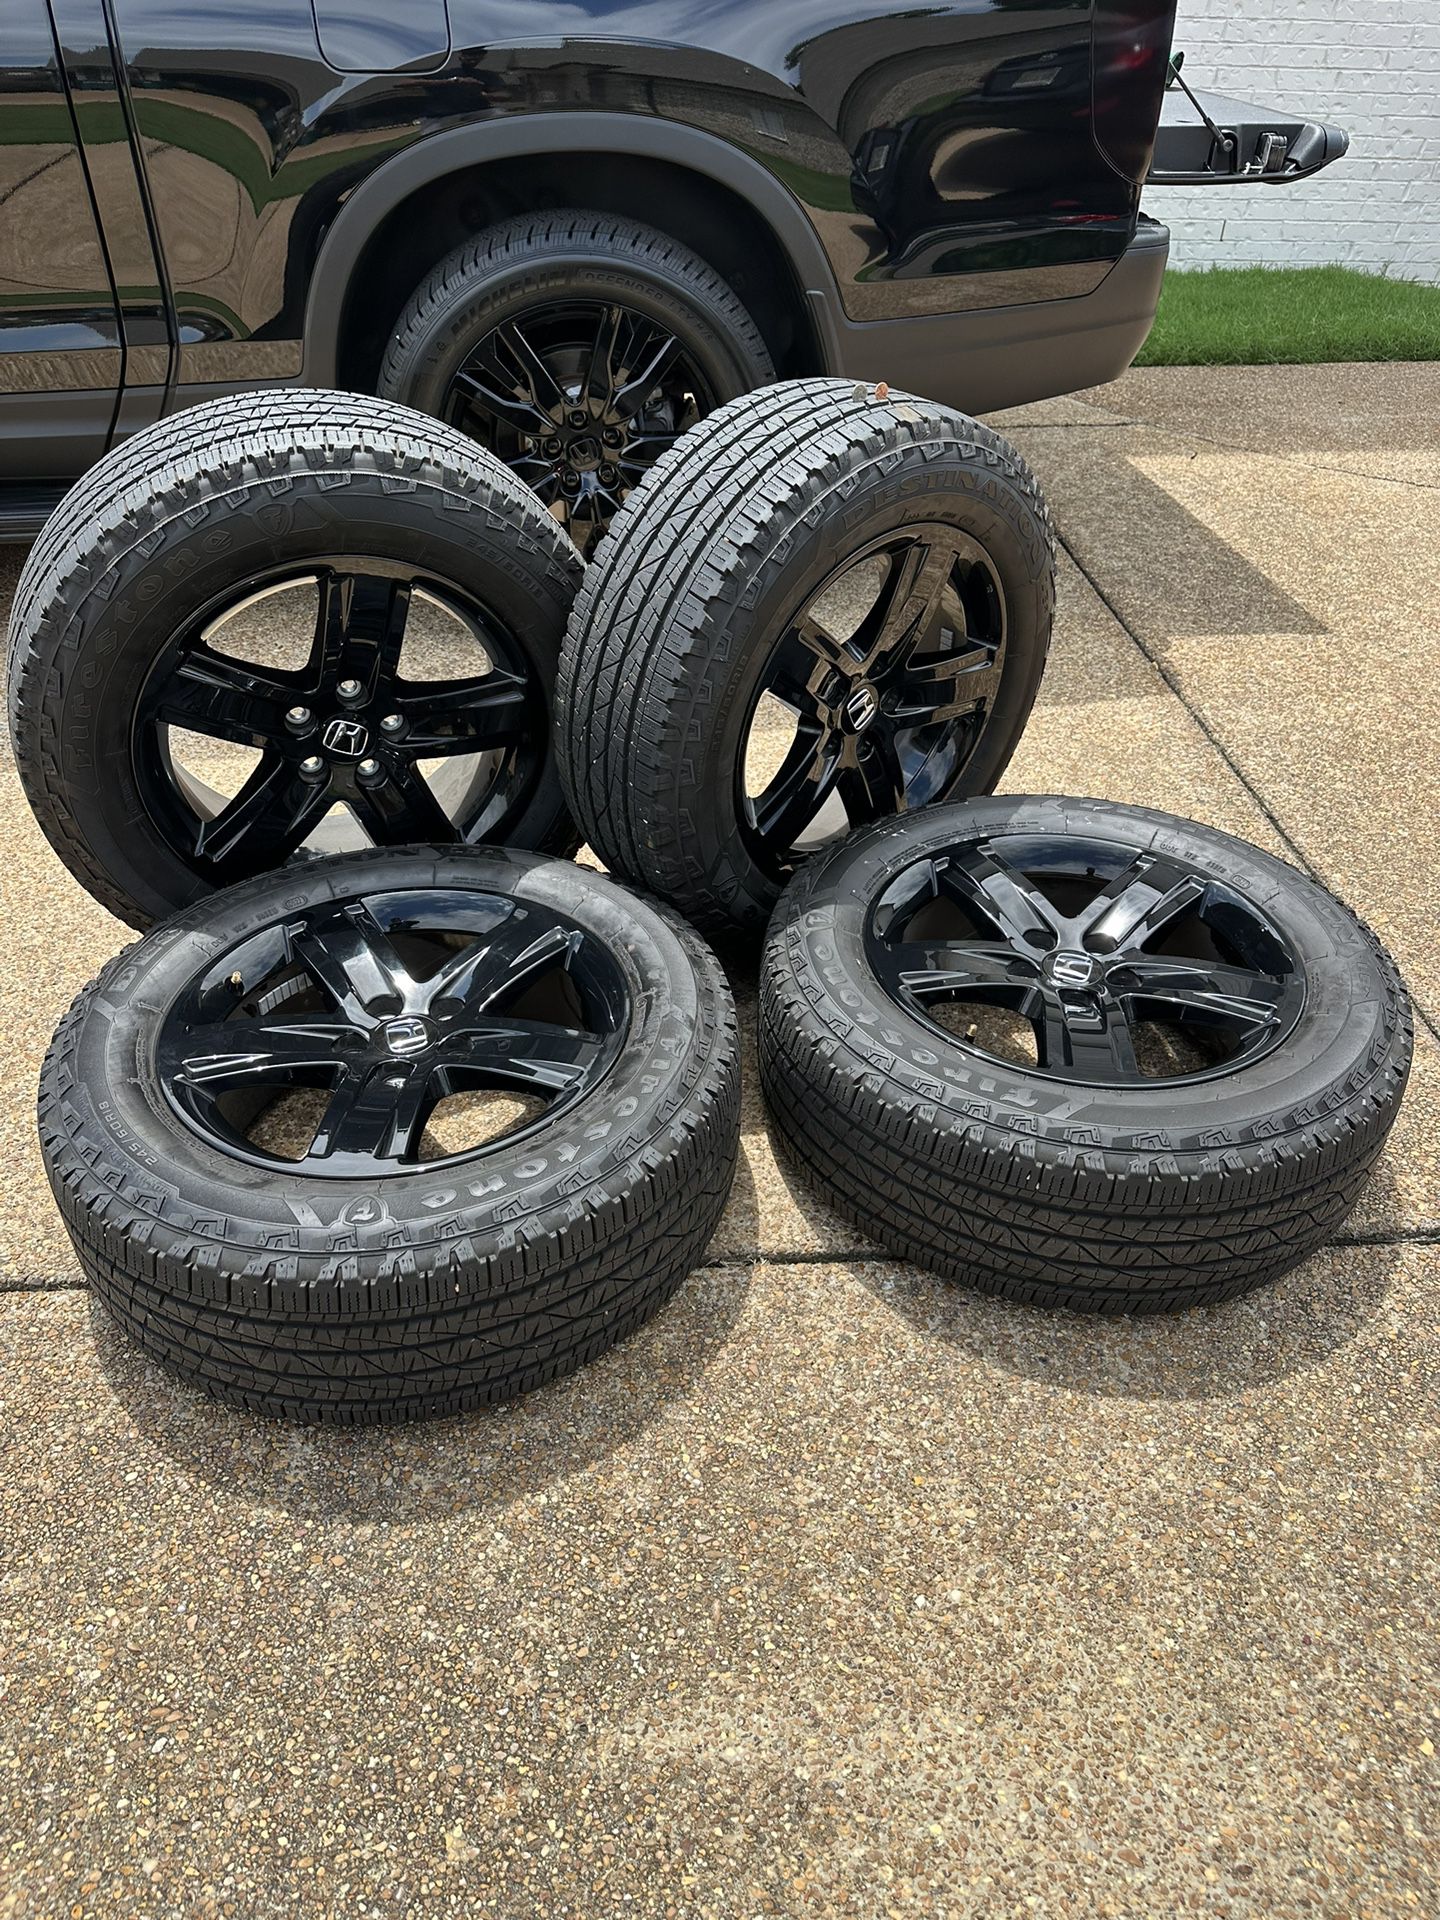 A set of Honda Ridgeline Black Edition Wheels And Tires